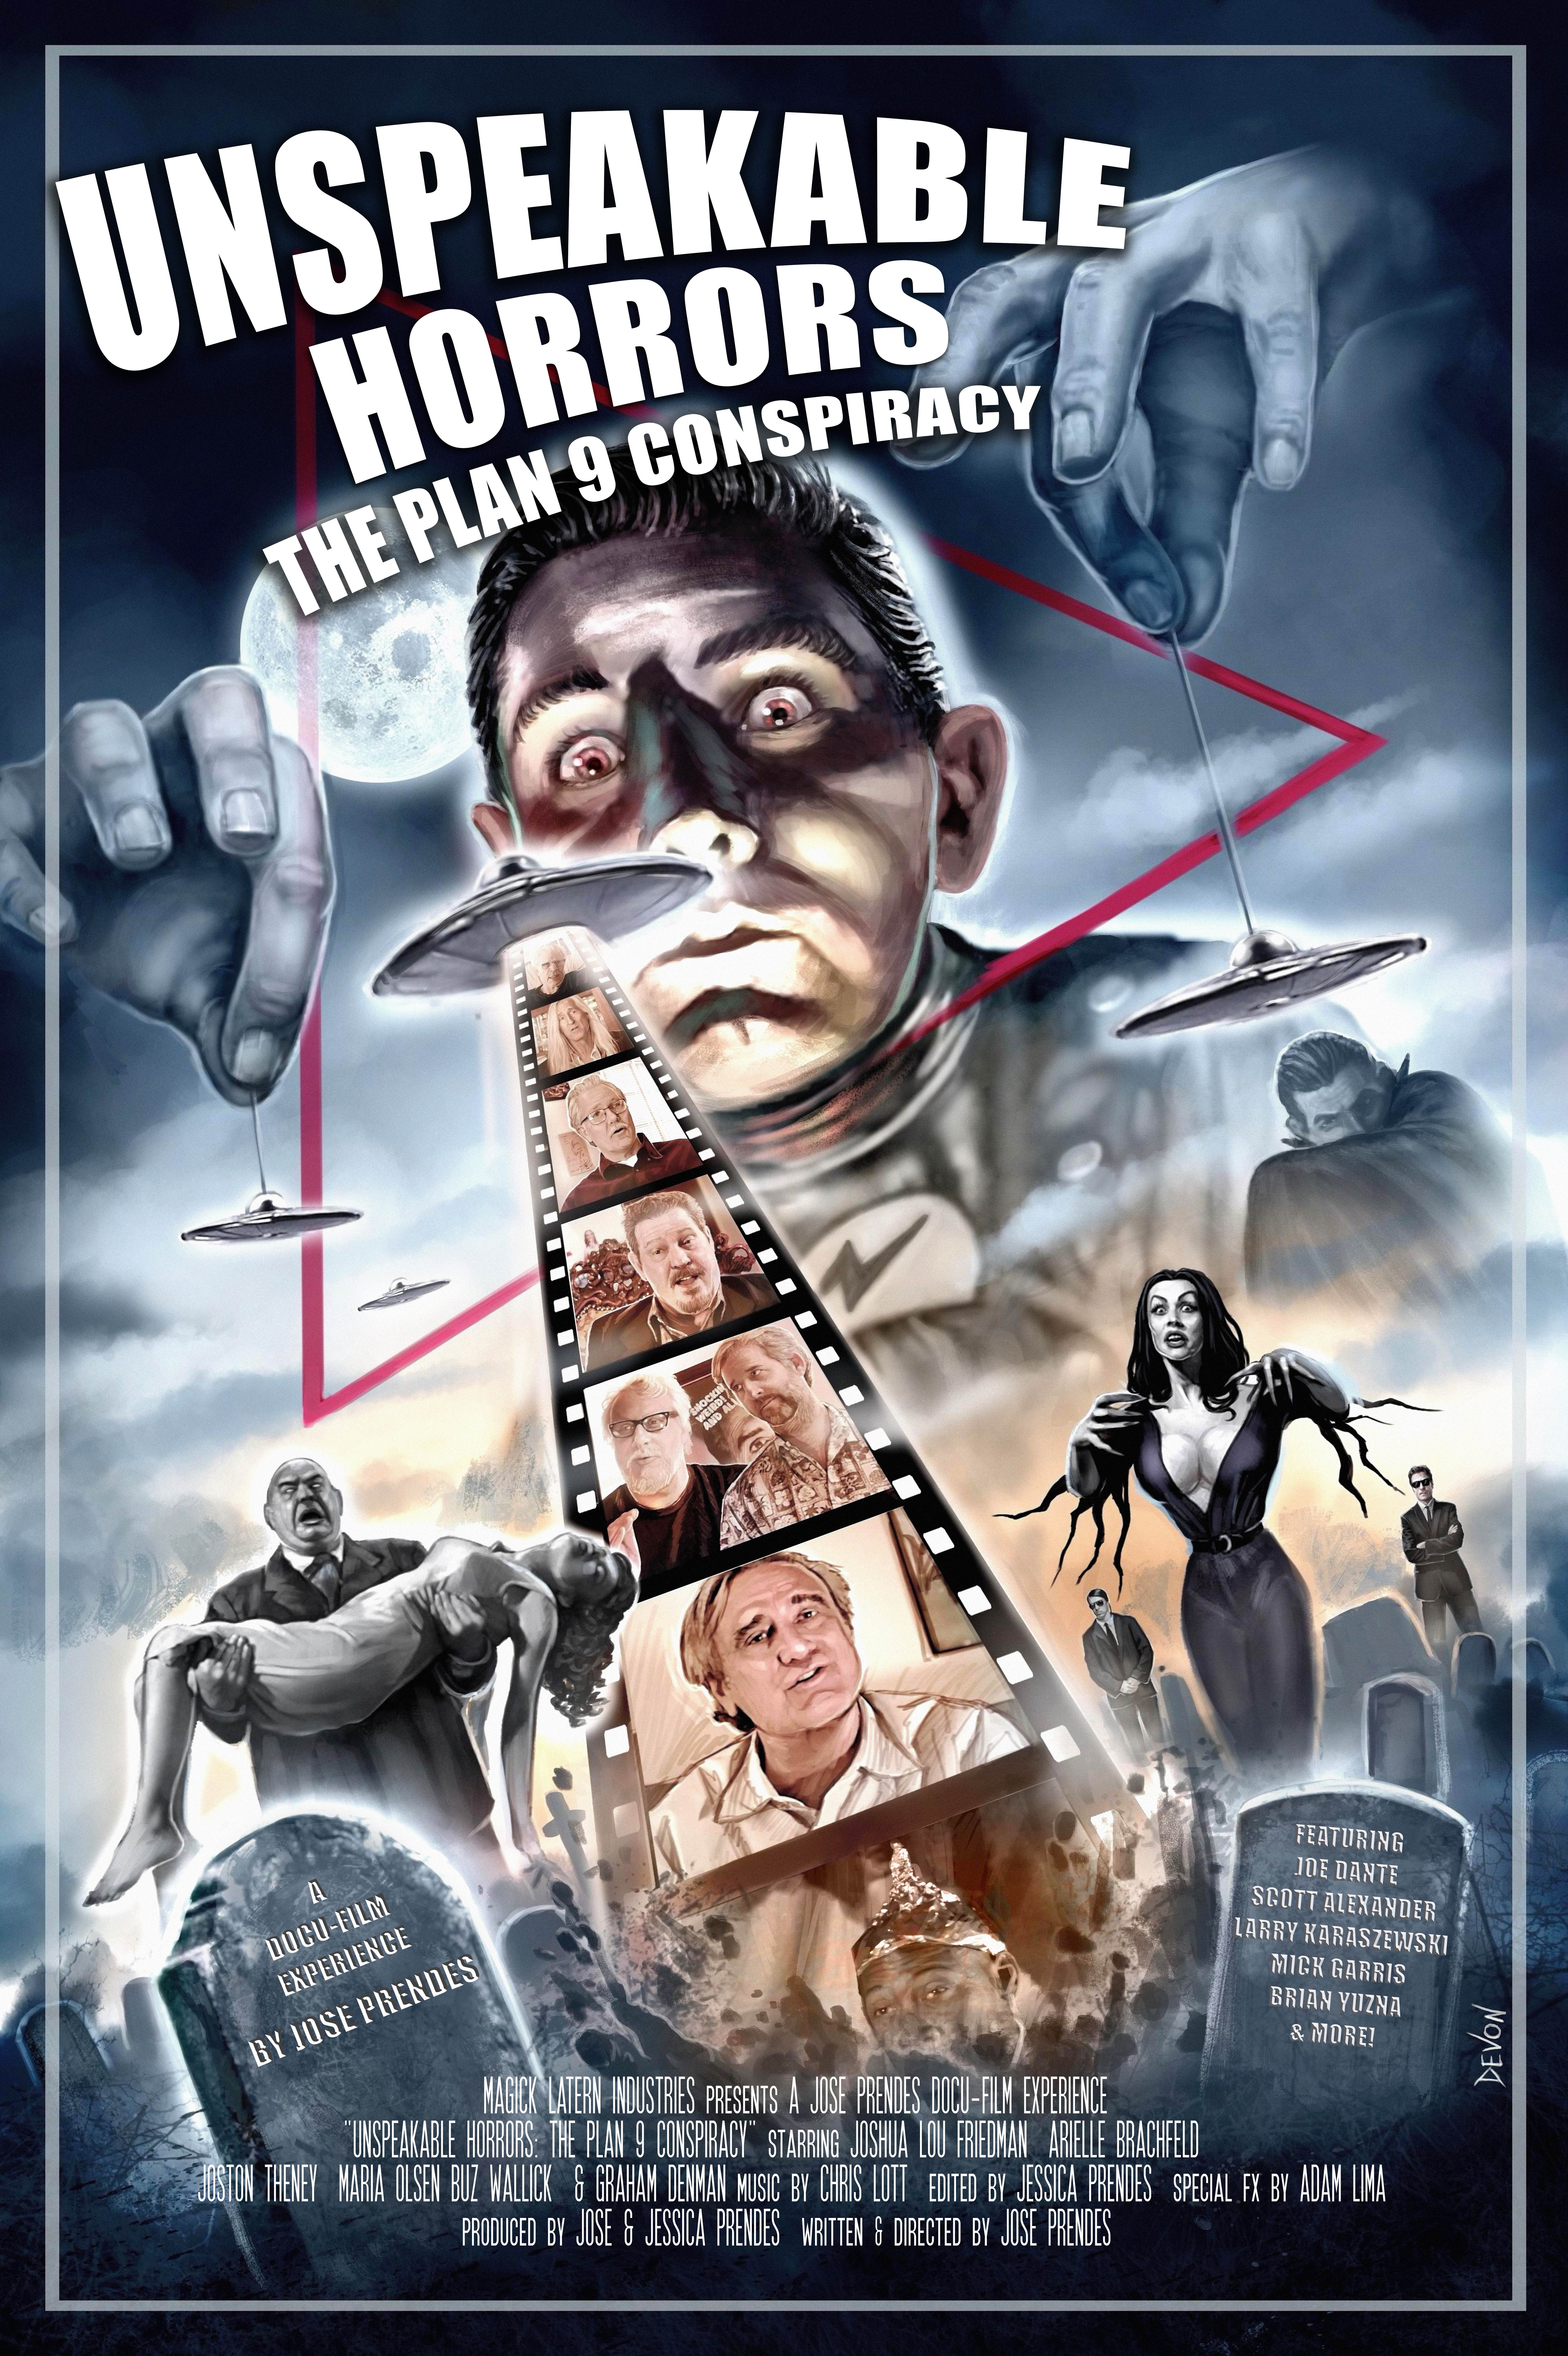 Unspeakable Horrors: The Plan 9 Conspiracy (2016) starring Arielle Brachfeld on DVD on DVD